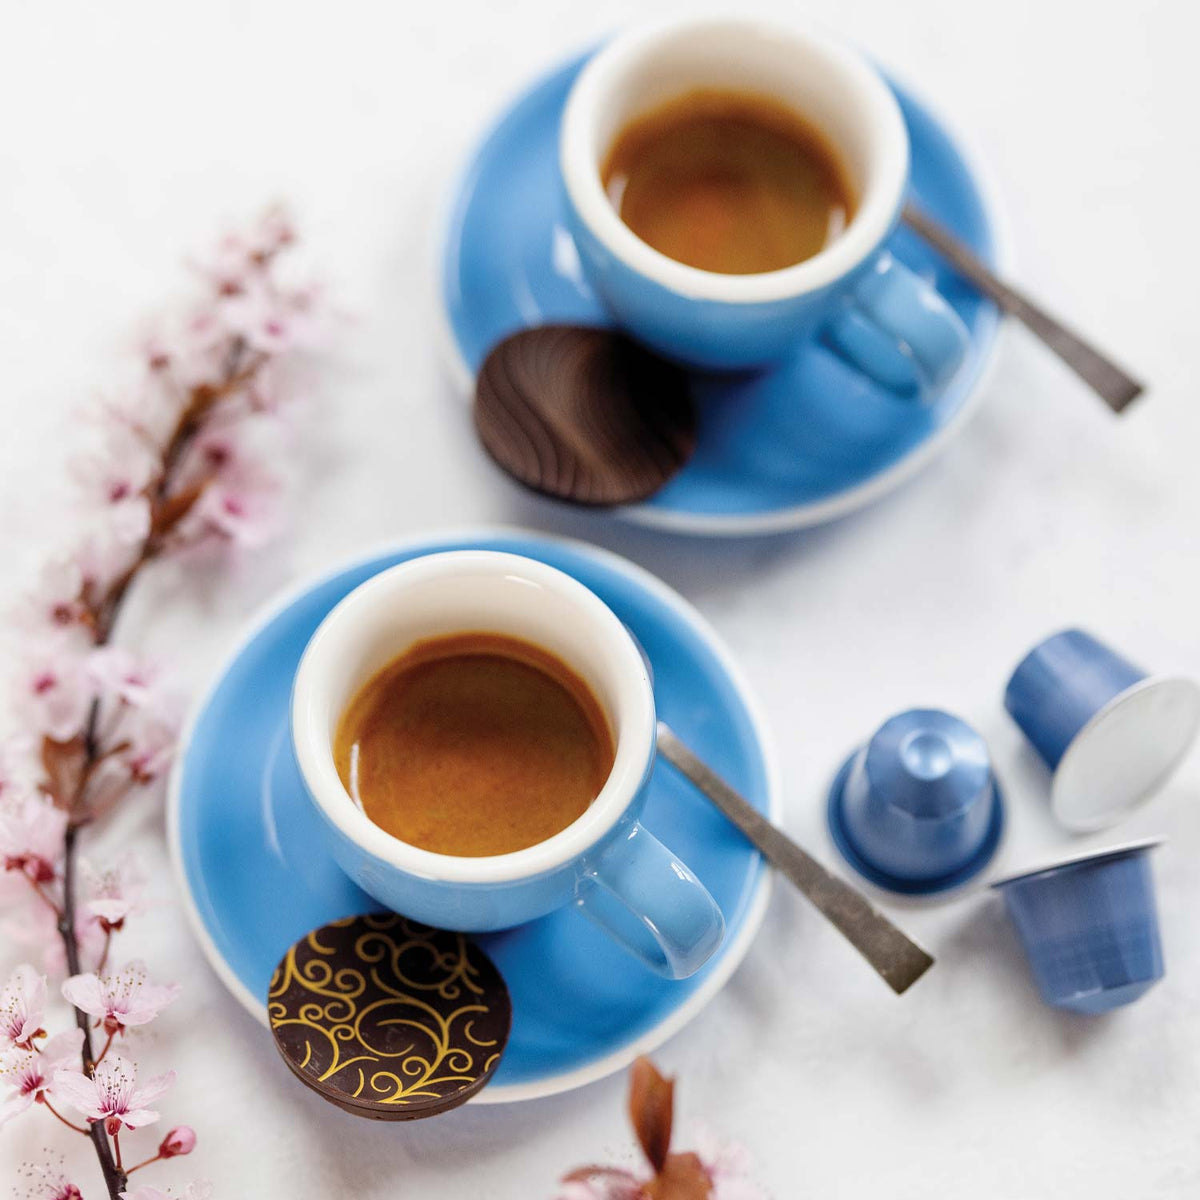 Artisan-coffee-coThe-big-shot_Chocolate-flight_blue-cups_saucers